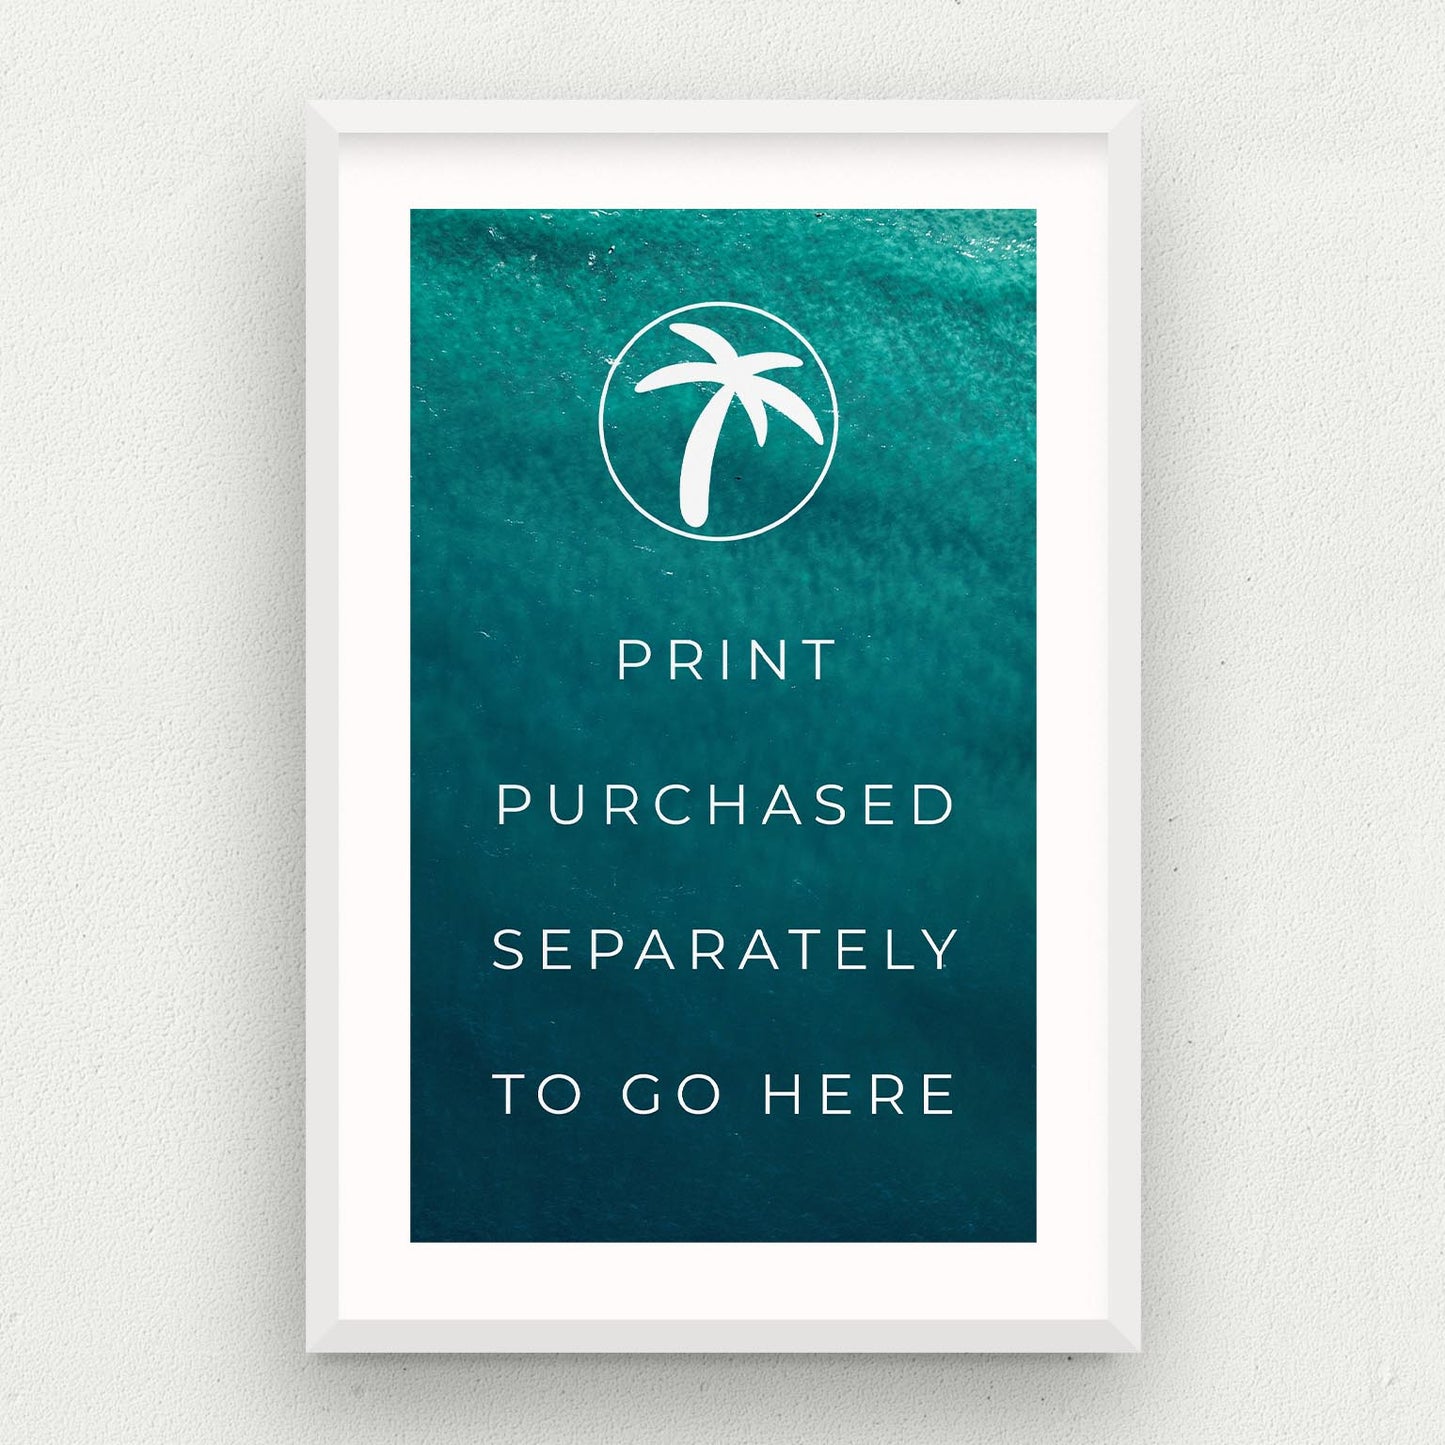 Frame your print